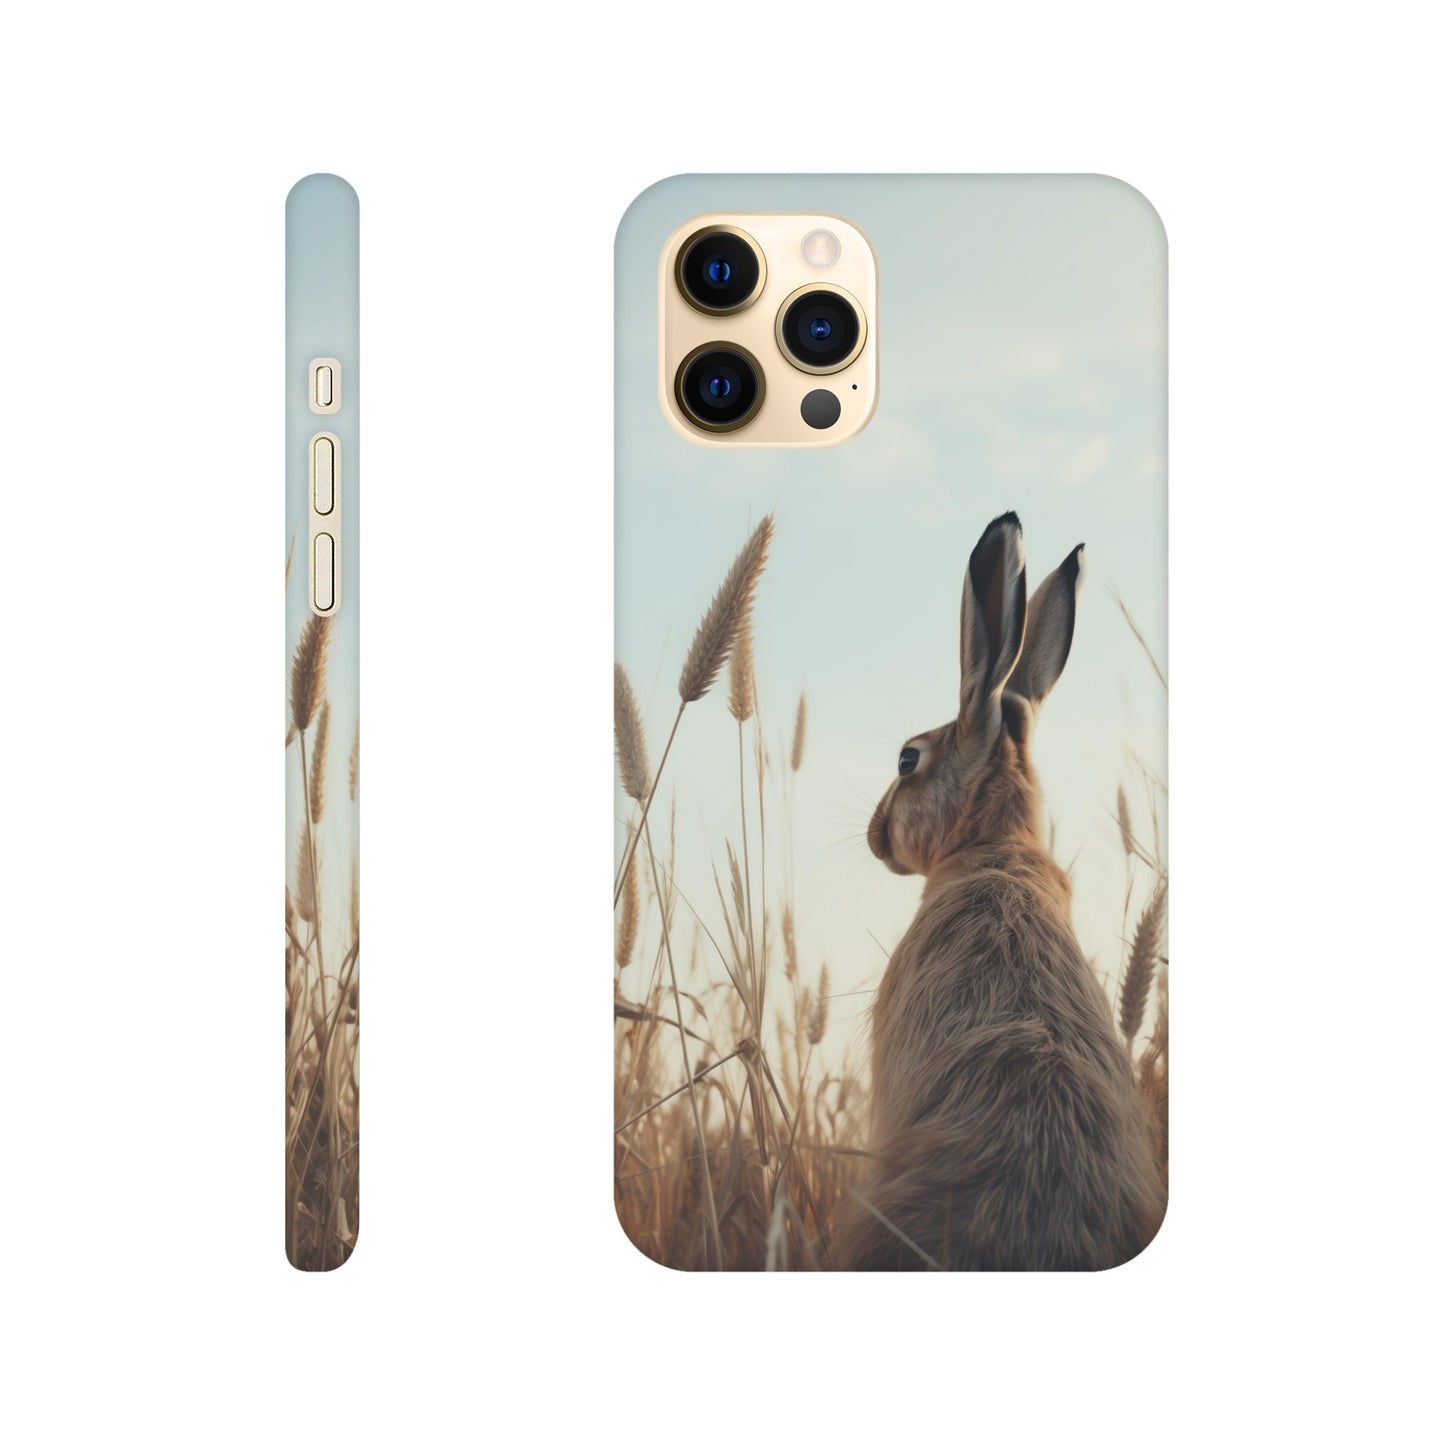 Souvenirs de Lapin (iPhone | Coque Samsung - frais de port inclus)